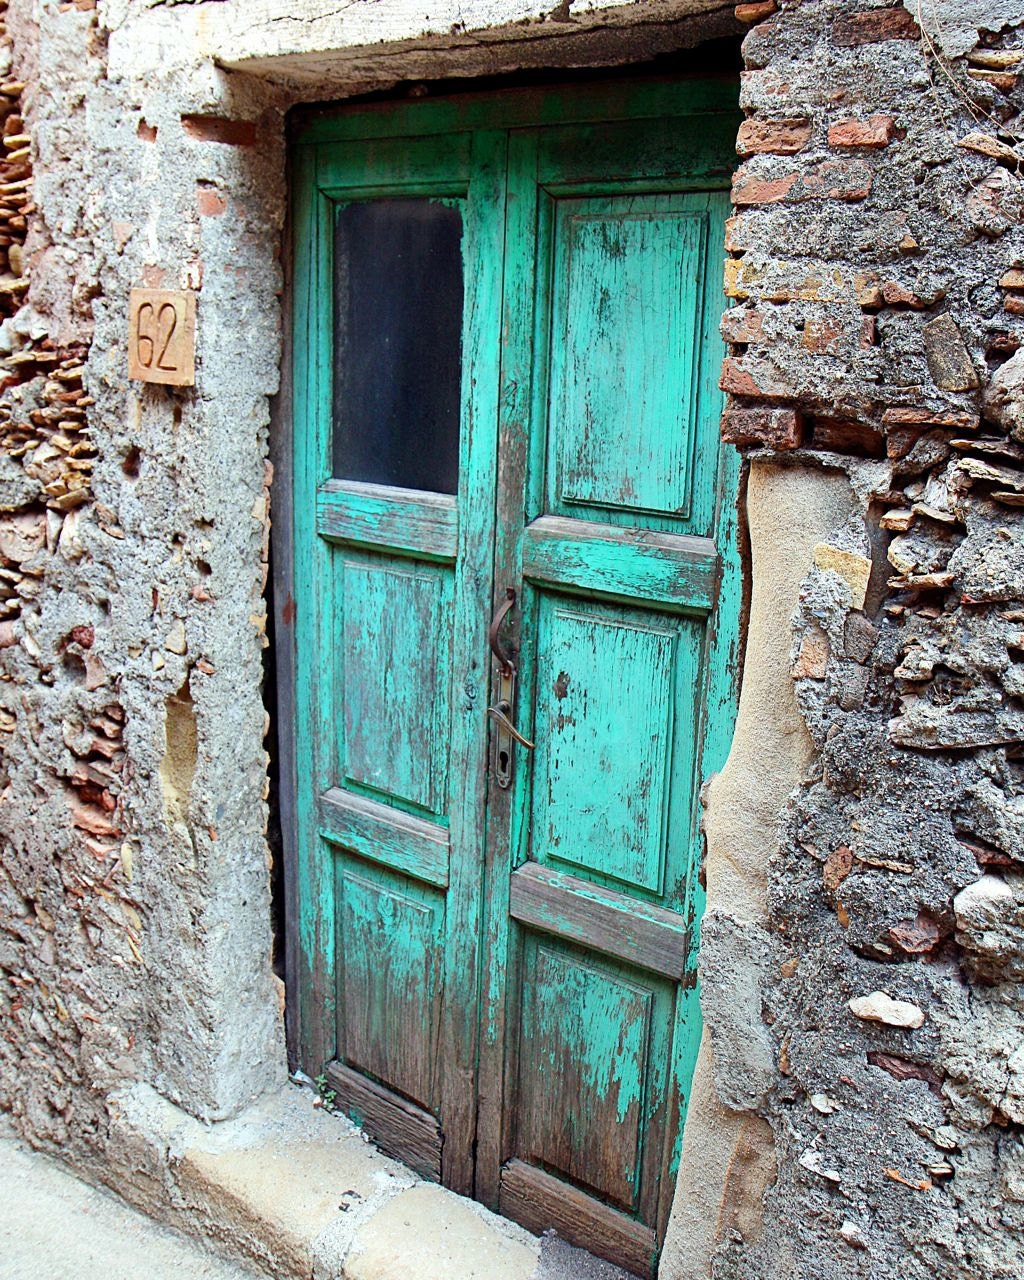 Aqua Door Photo - Sicily Italy Photograph - Old Blue Door Photography - Rustic Turquoise Decor -  Brick Stone Wood - Natural Farmhouse Decor